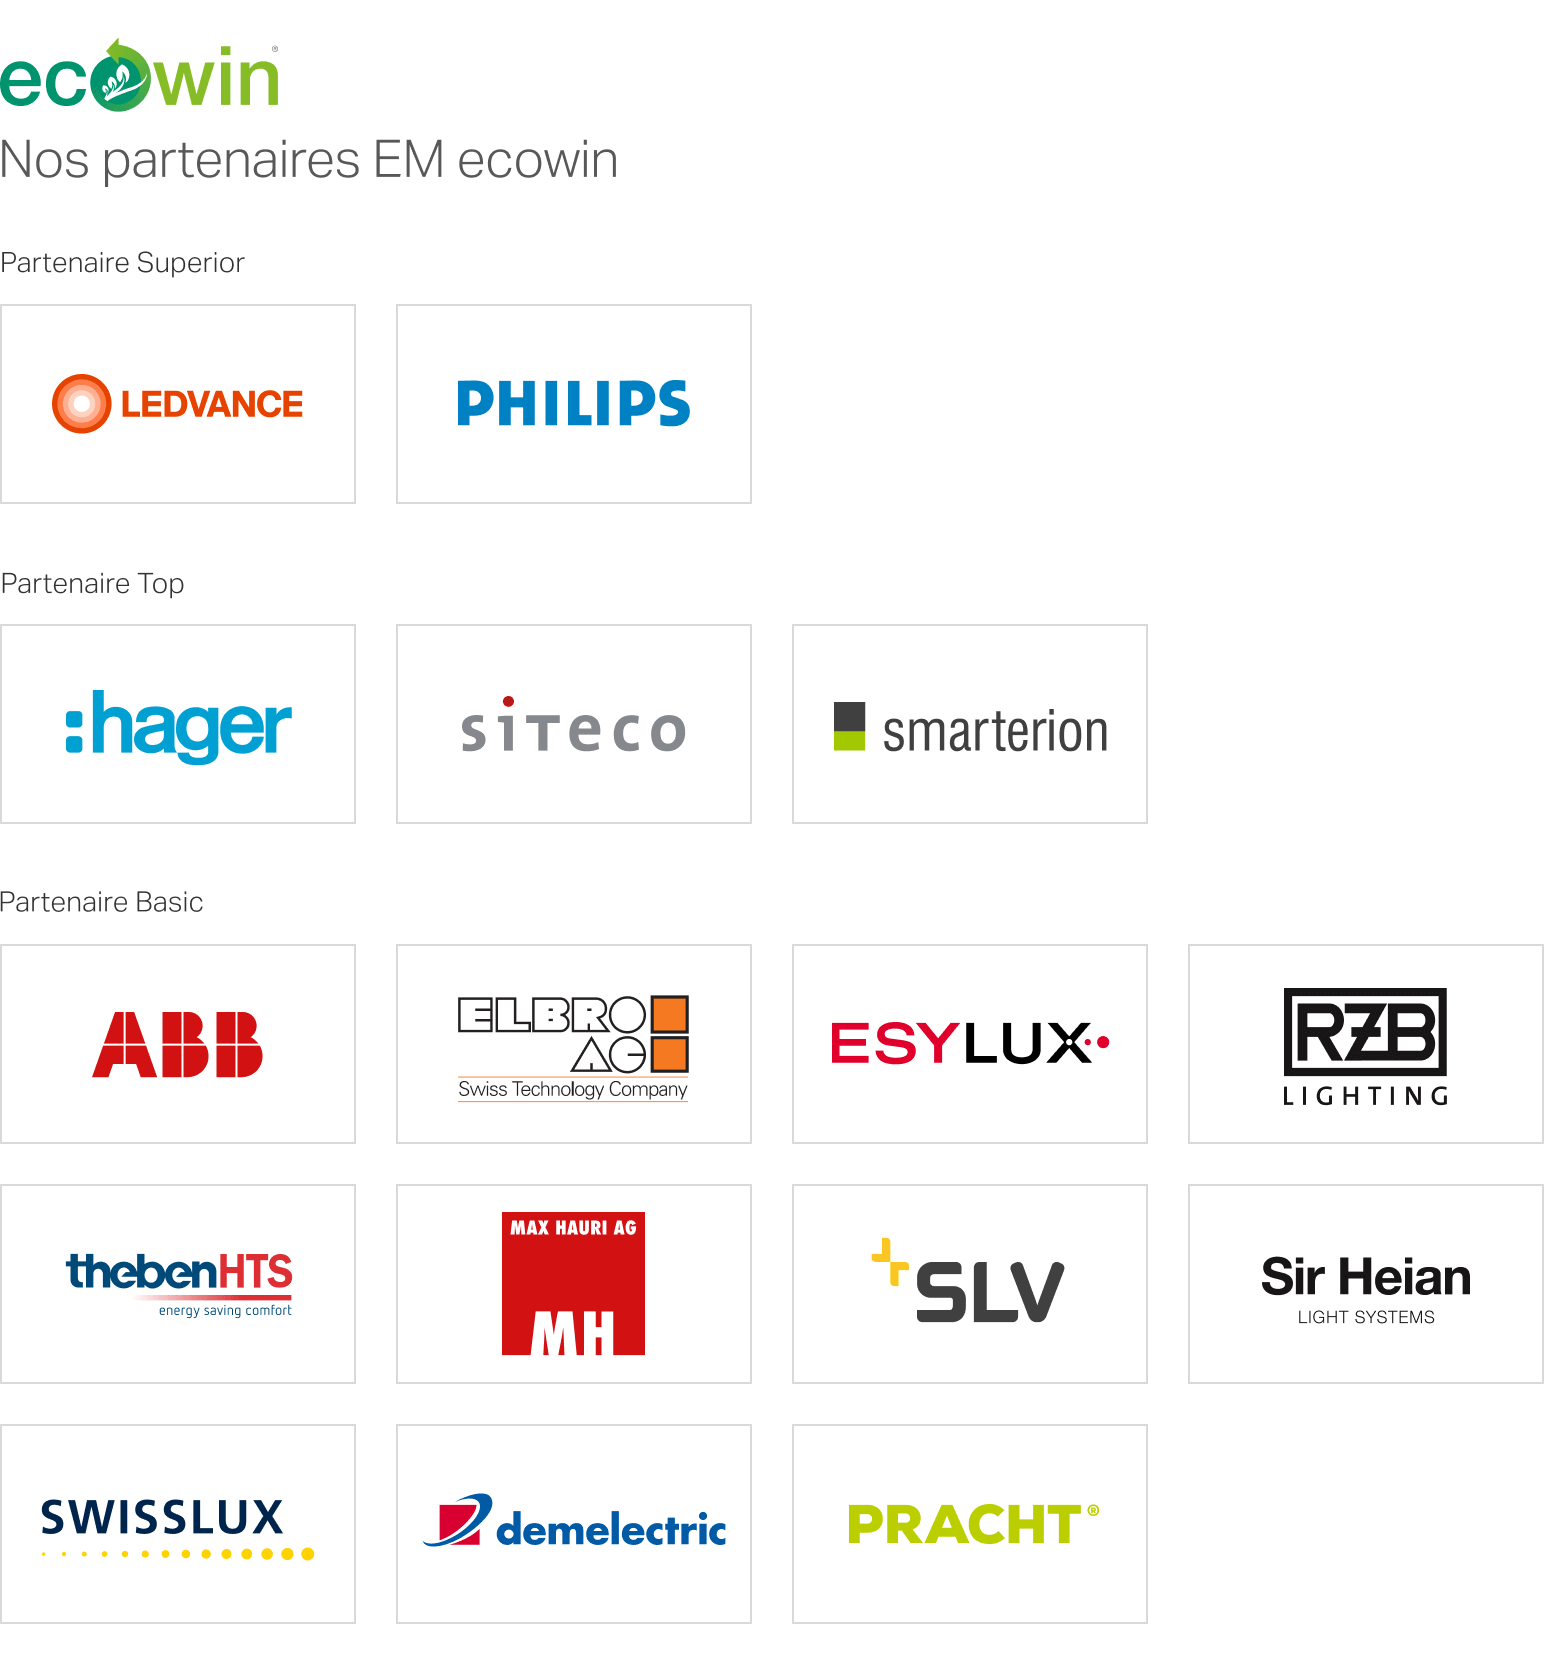 EM ecowin Partners